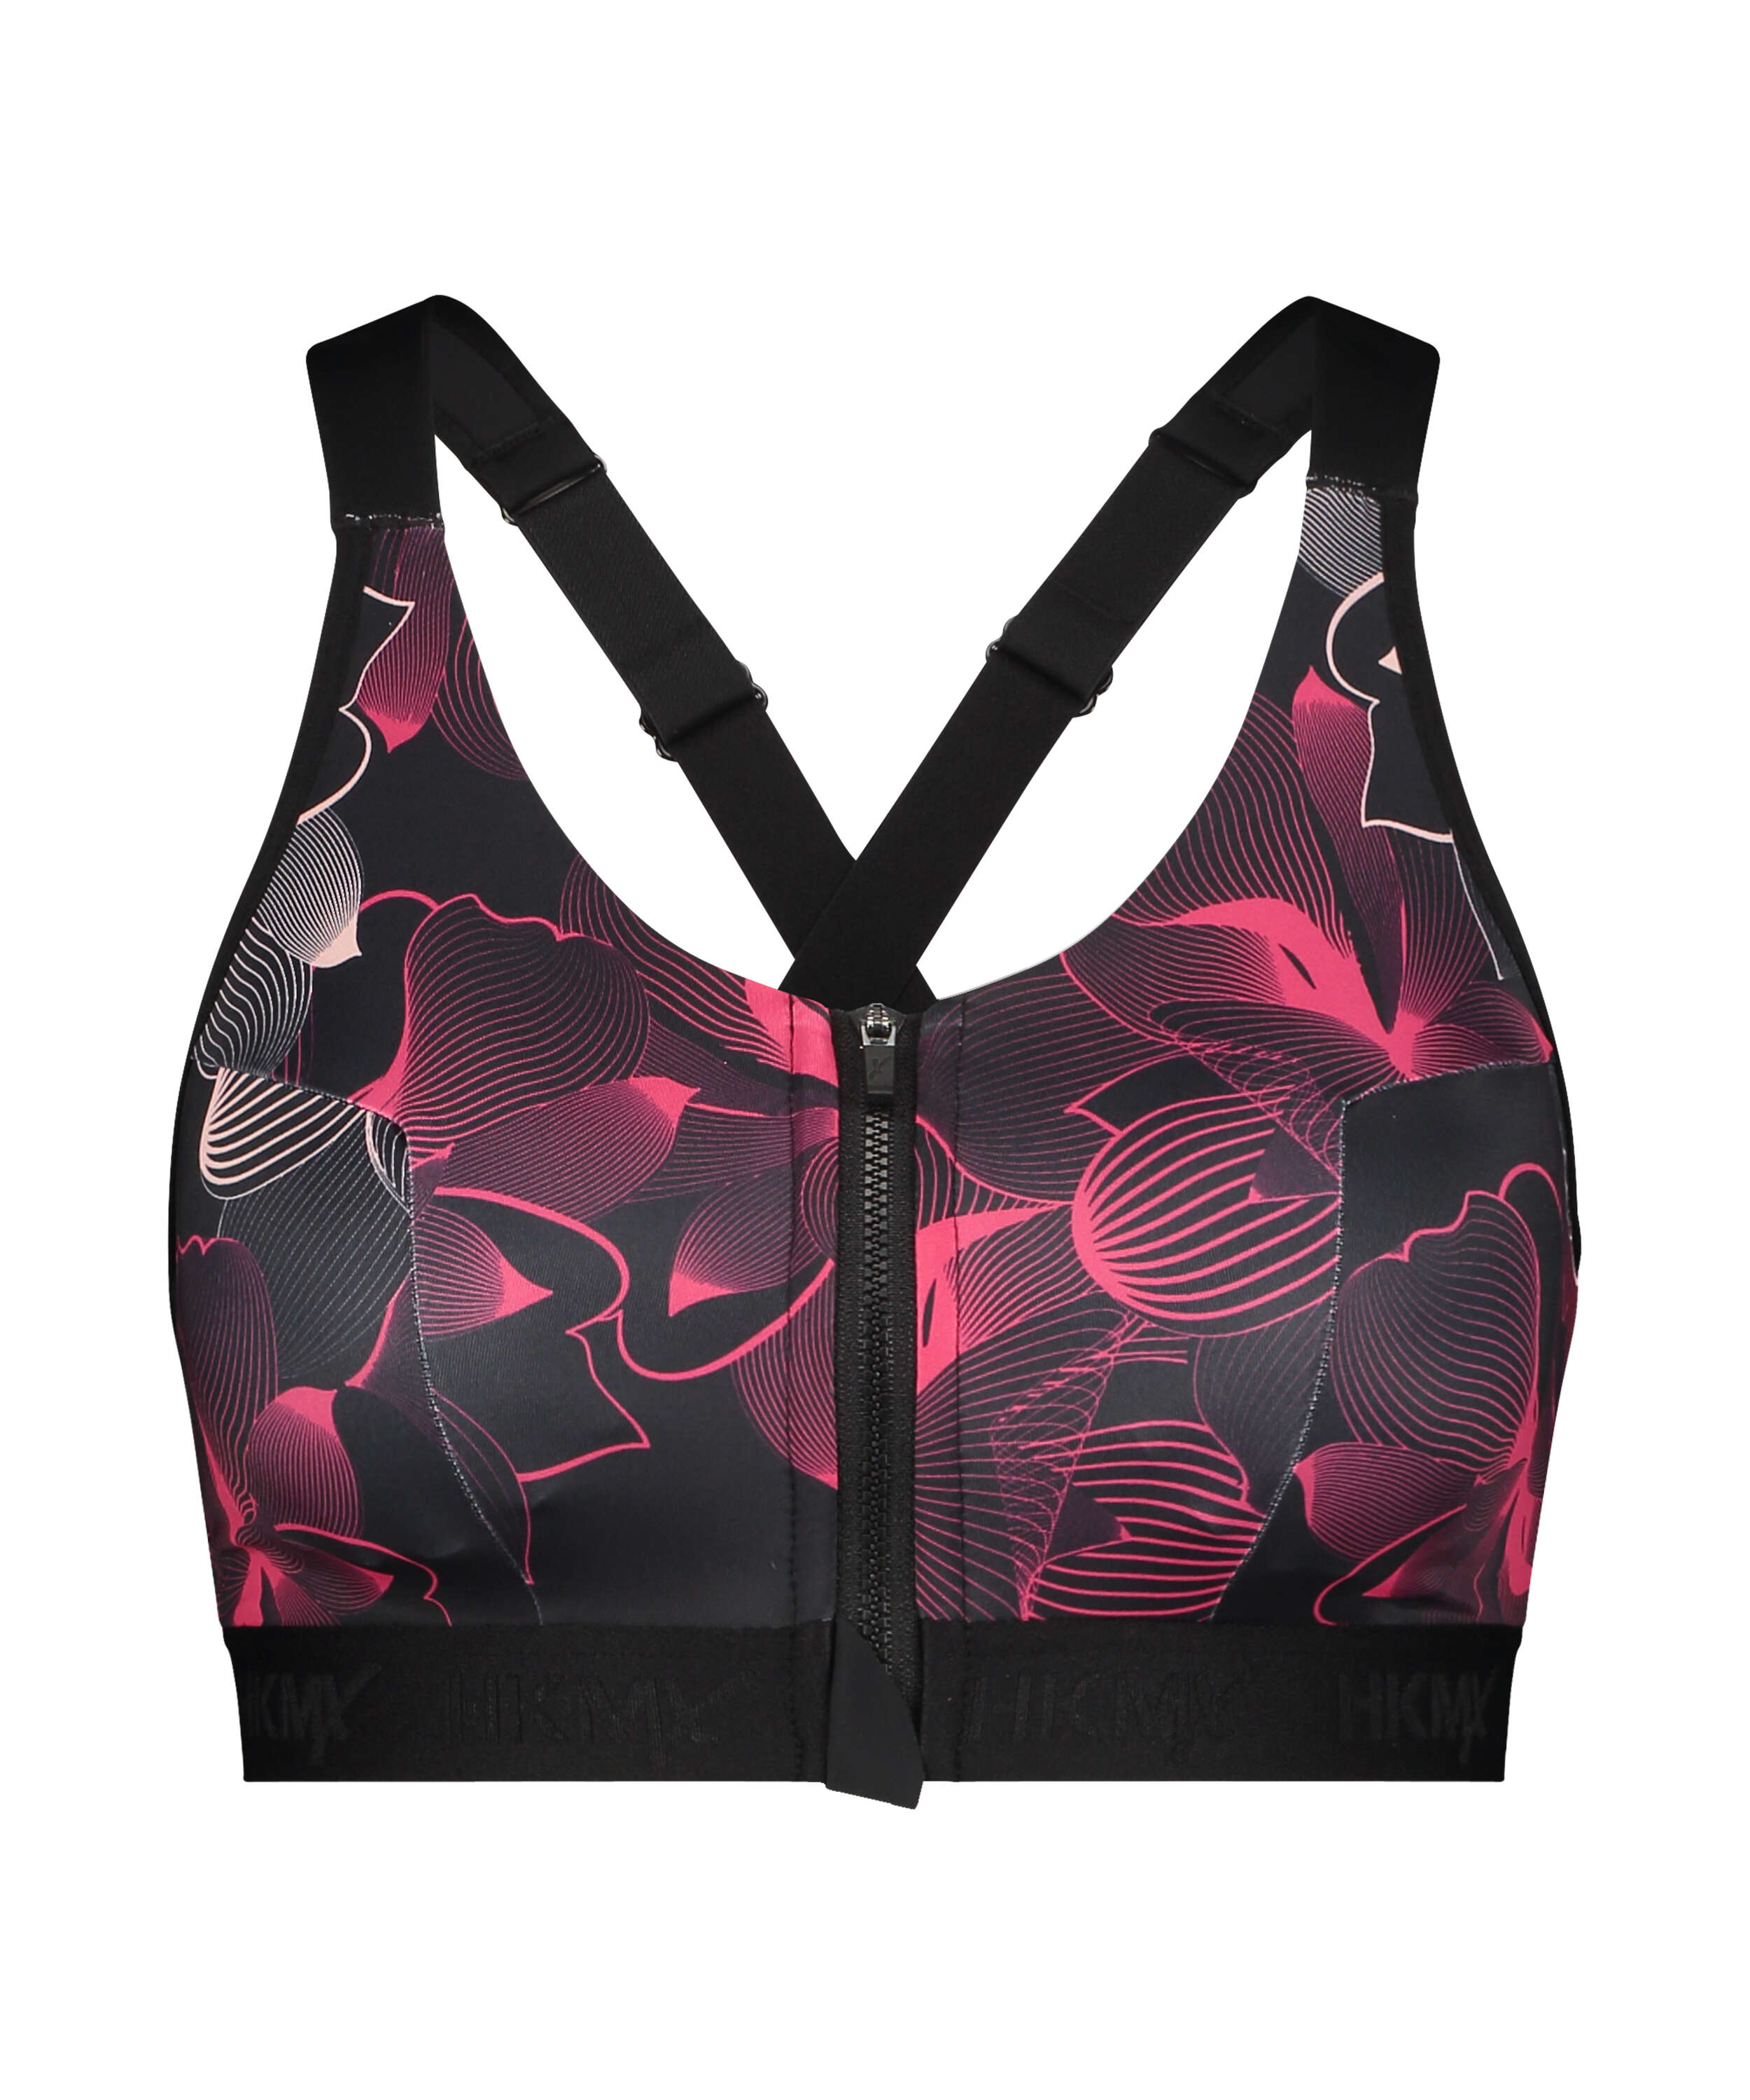 HKMX Sports bra The Pro Level 3, Pink, main